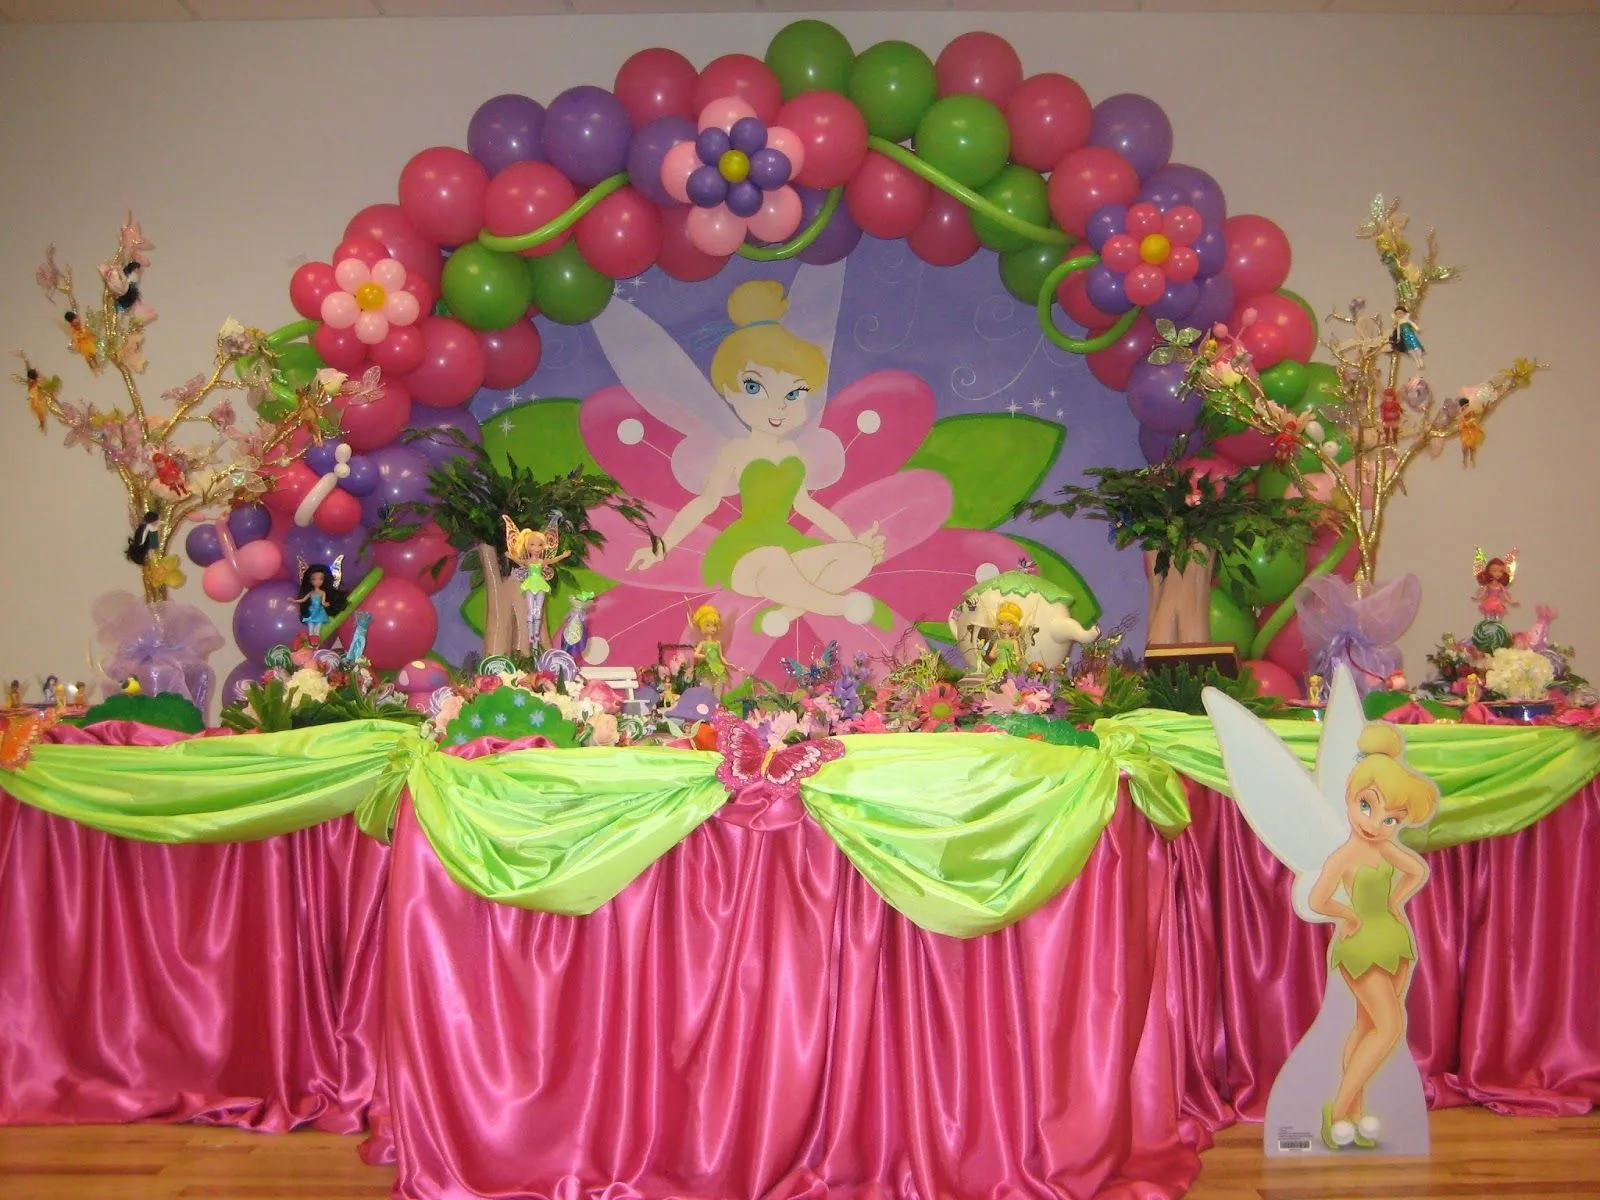 MuyAmeno.com: Decoracion Tinkerbell para Fiestas Infantiles, parte 1